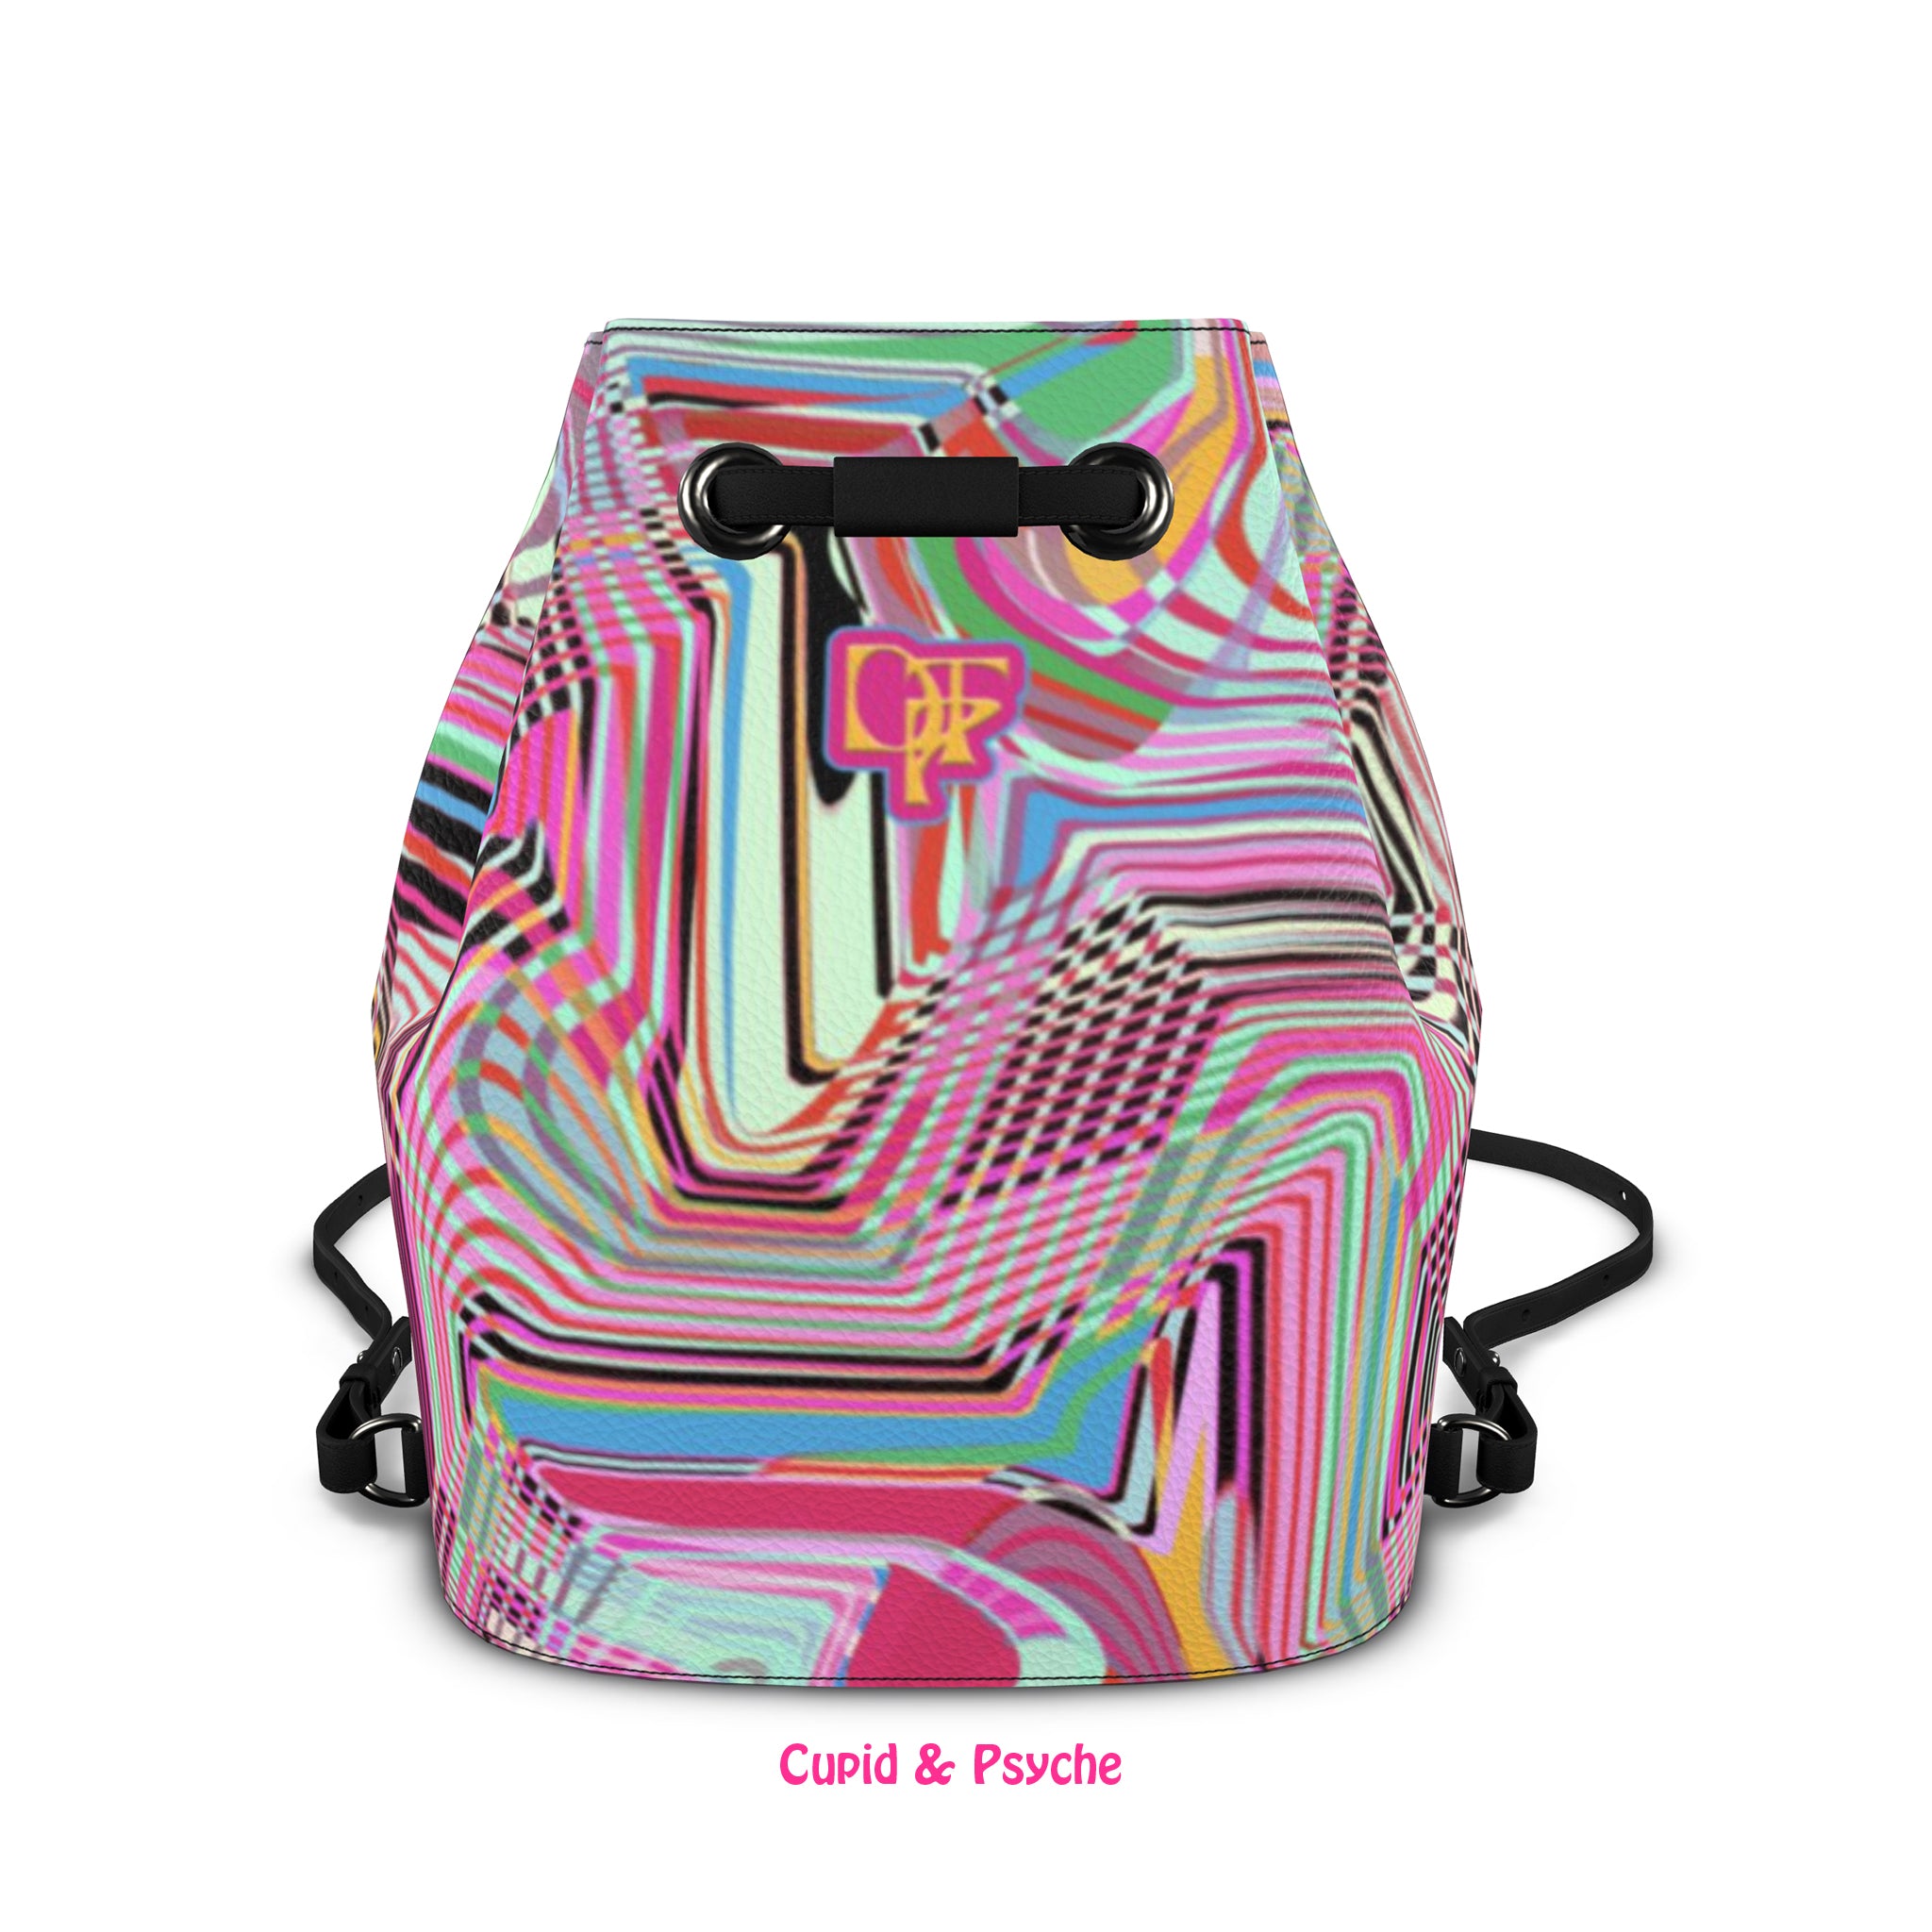 "La Clique” Mini Backpack in Cupid & Psyche